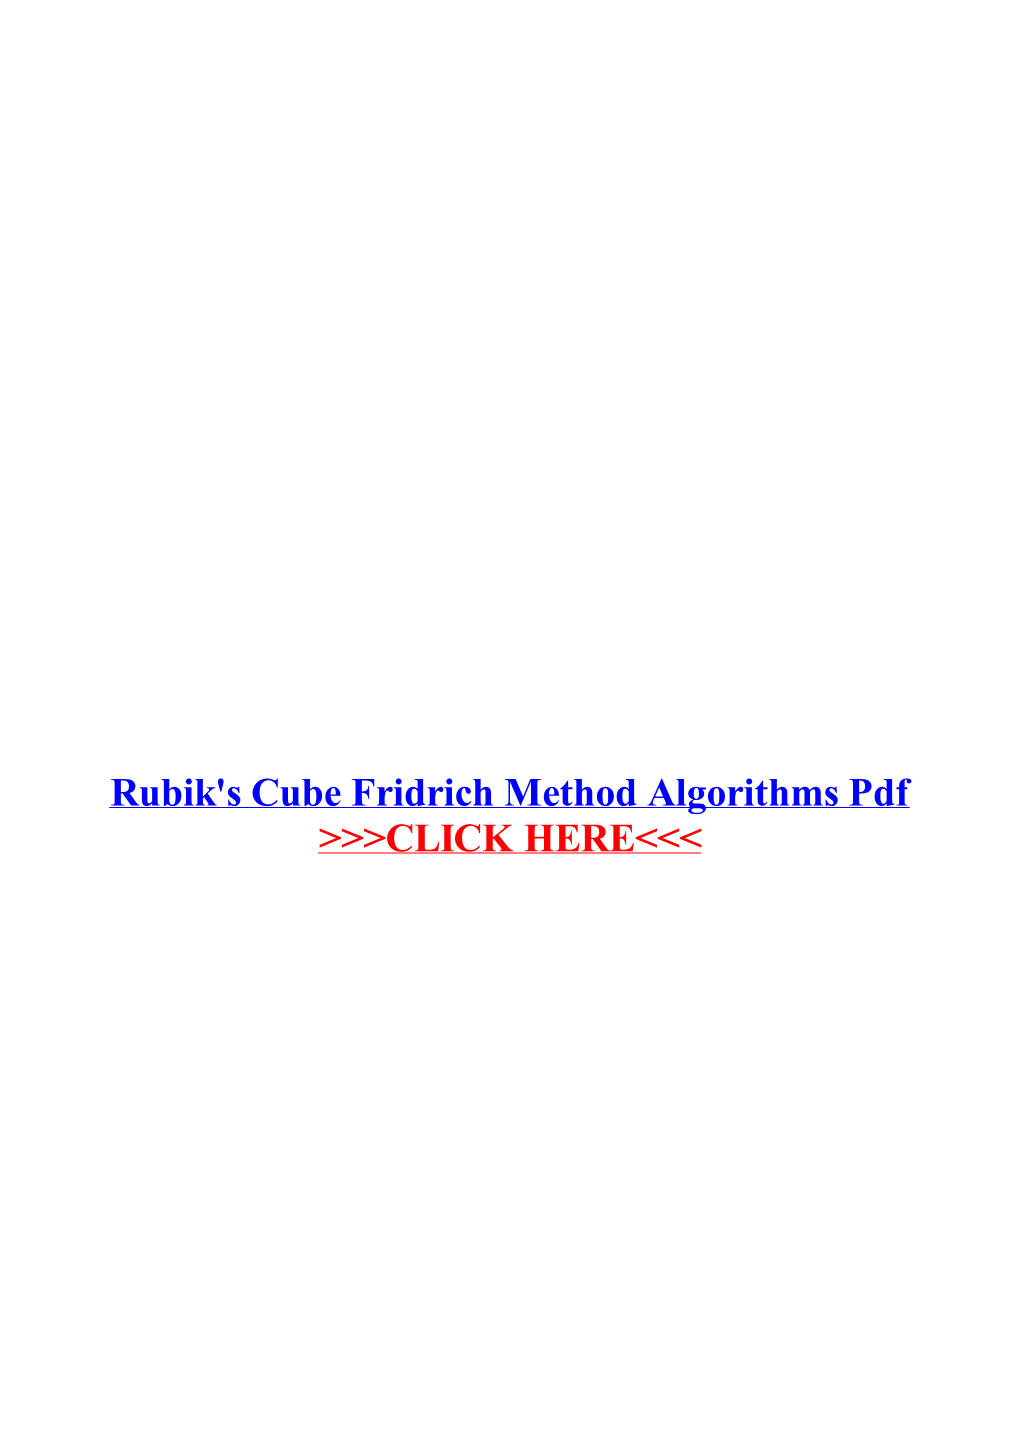 Rubik's Cube Fridrich Method Algorithms Pdf.Pdf